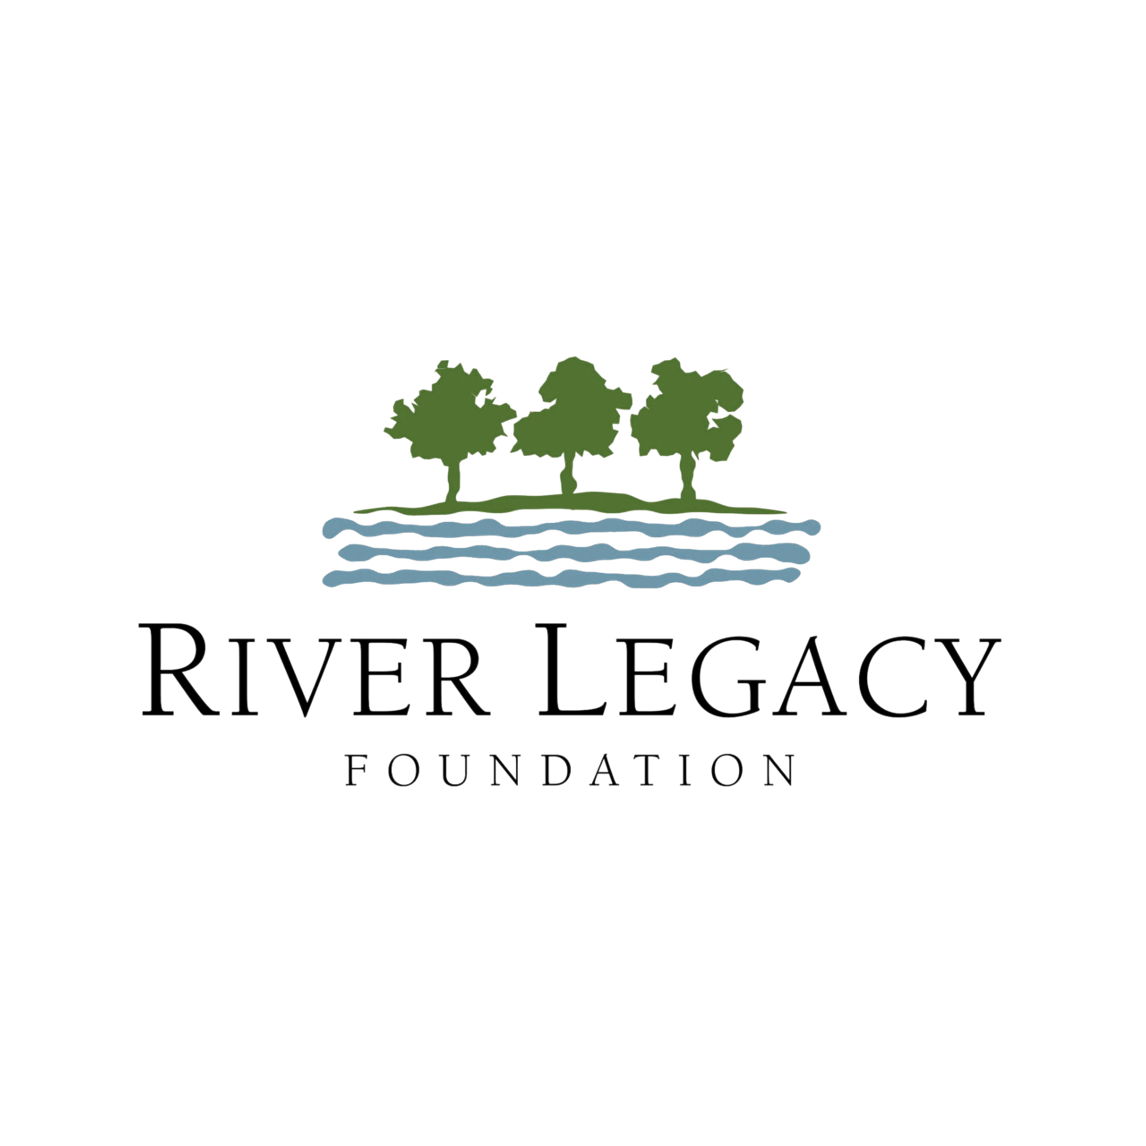 River Legacy Foundation